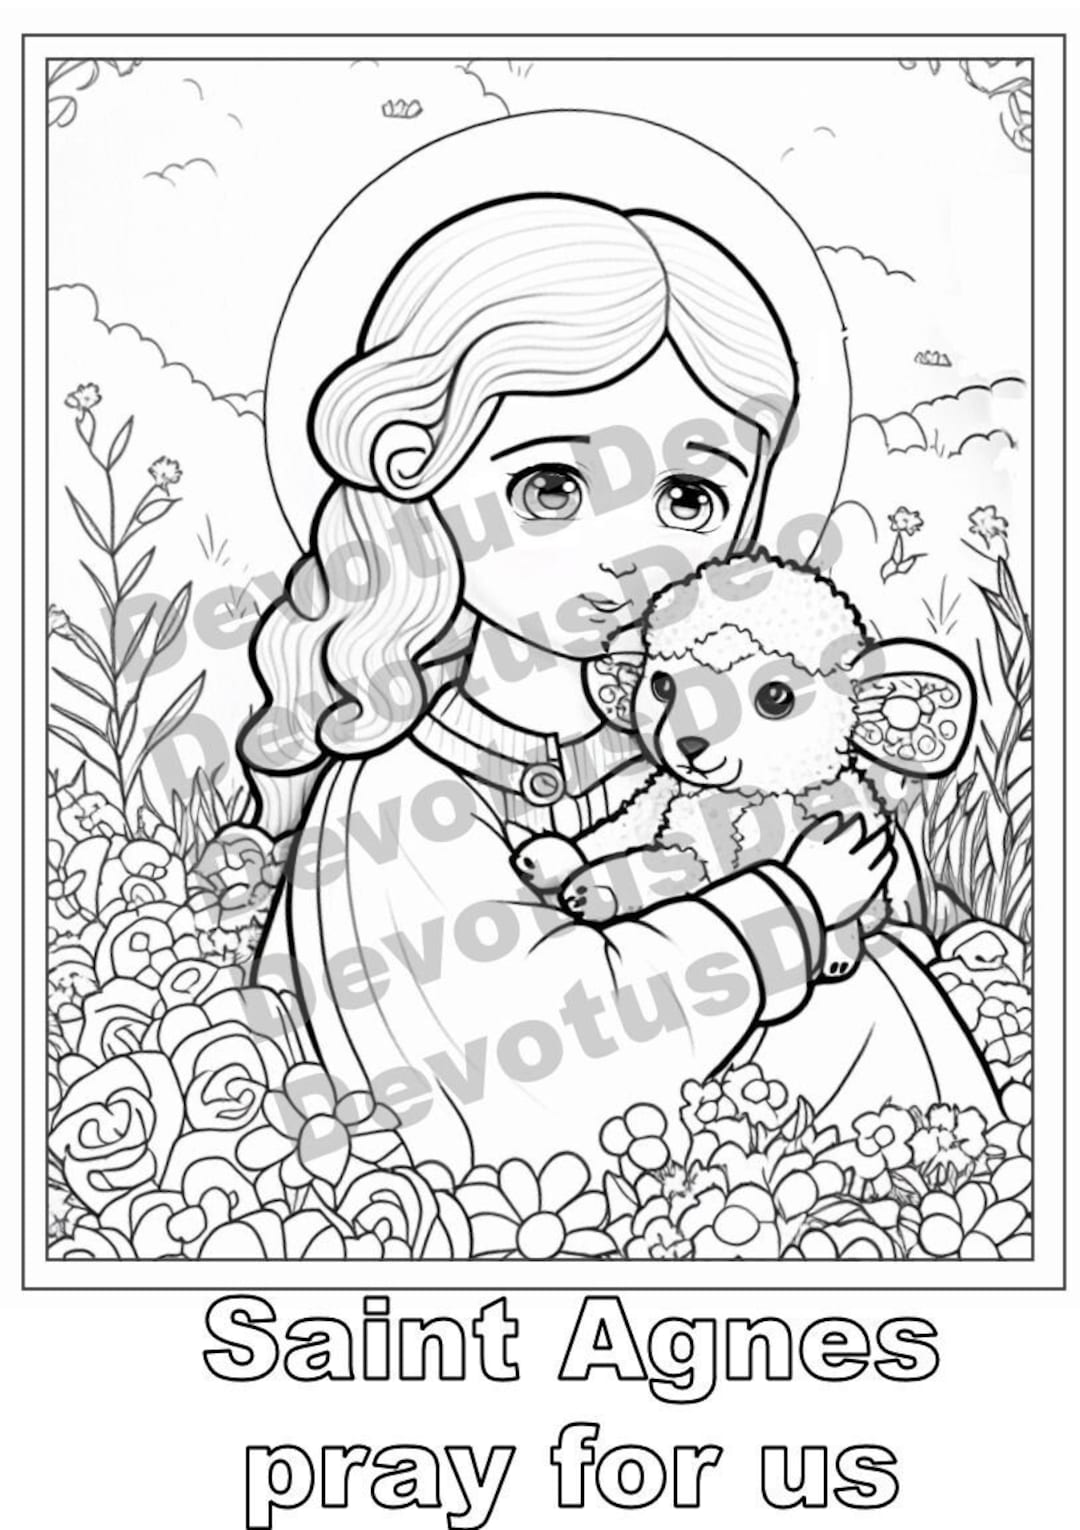 Catholic coloring page saint agnes christian instant download printable